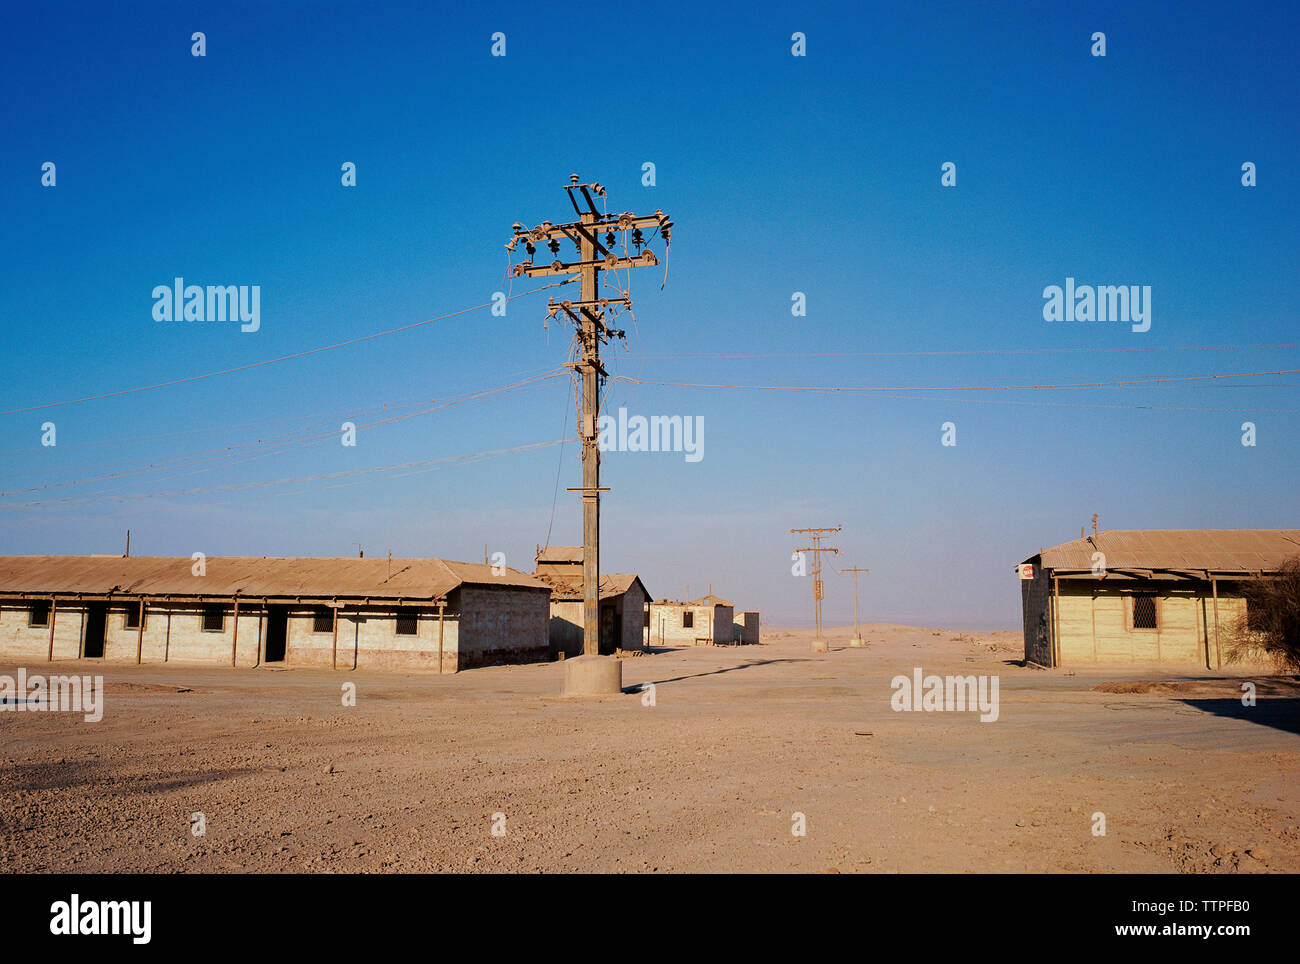 Strom pylon auf Feld gegen blauen Himmel Stockfoto